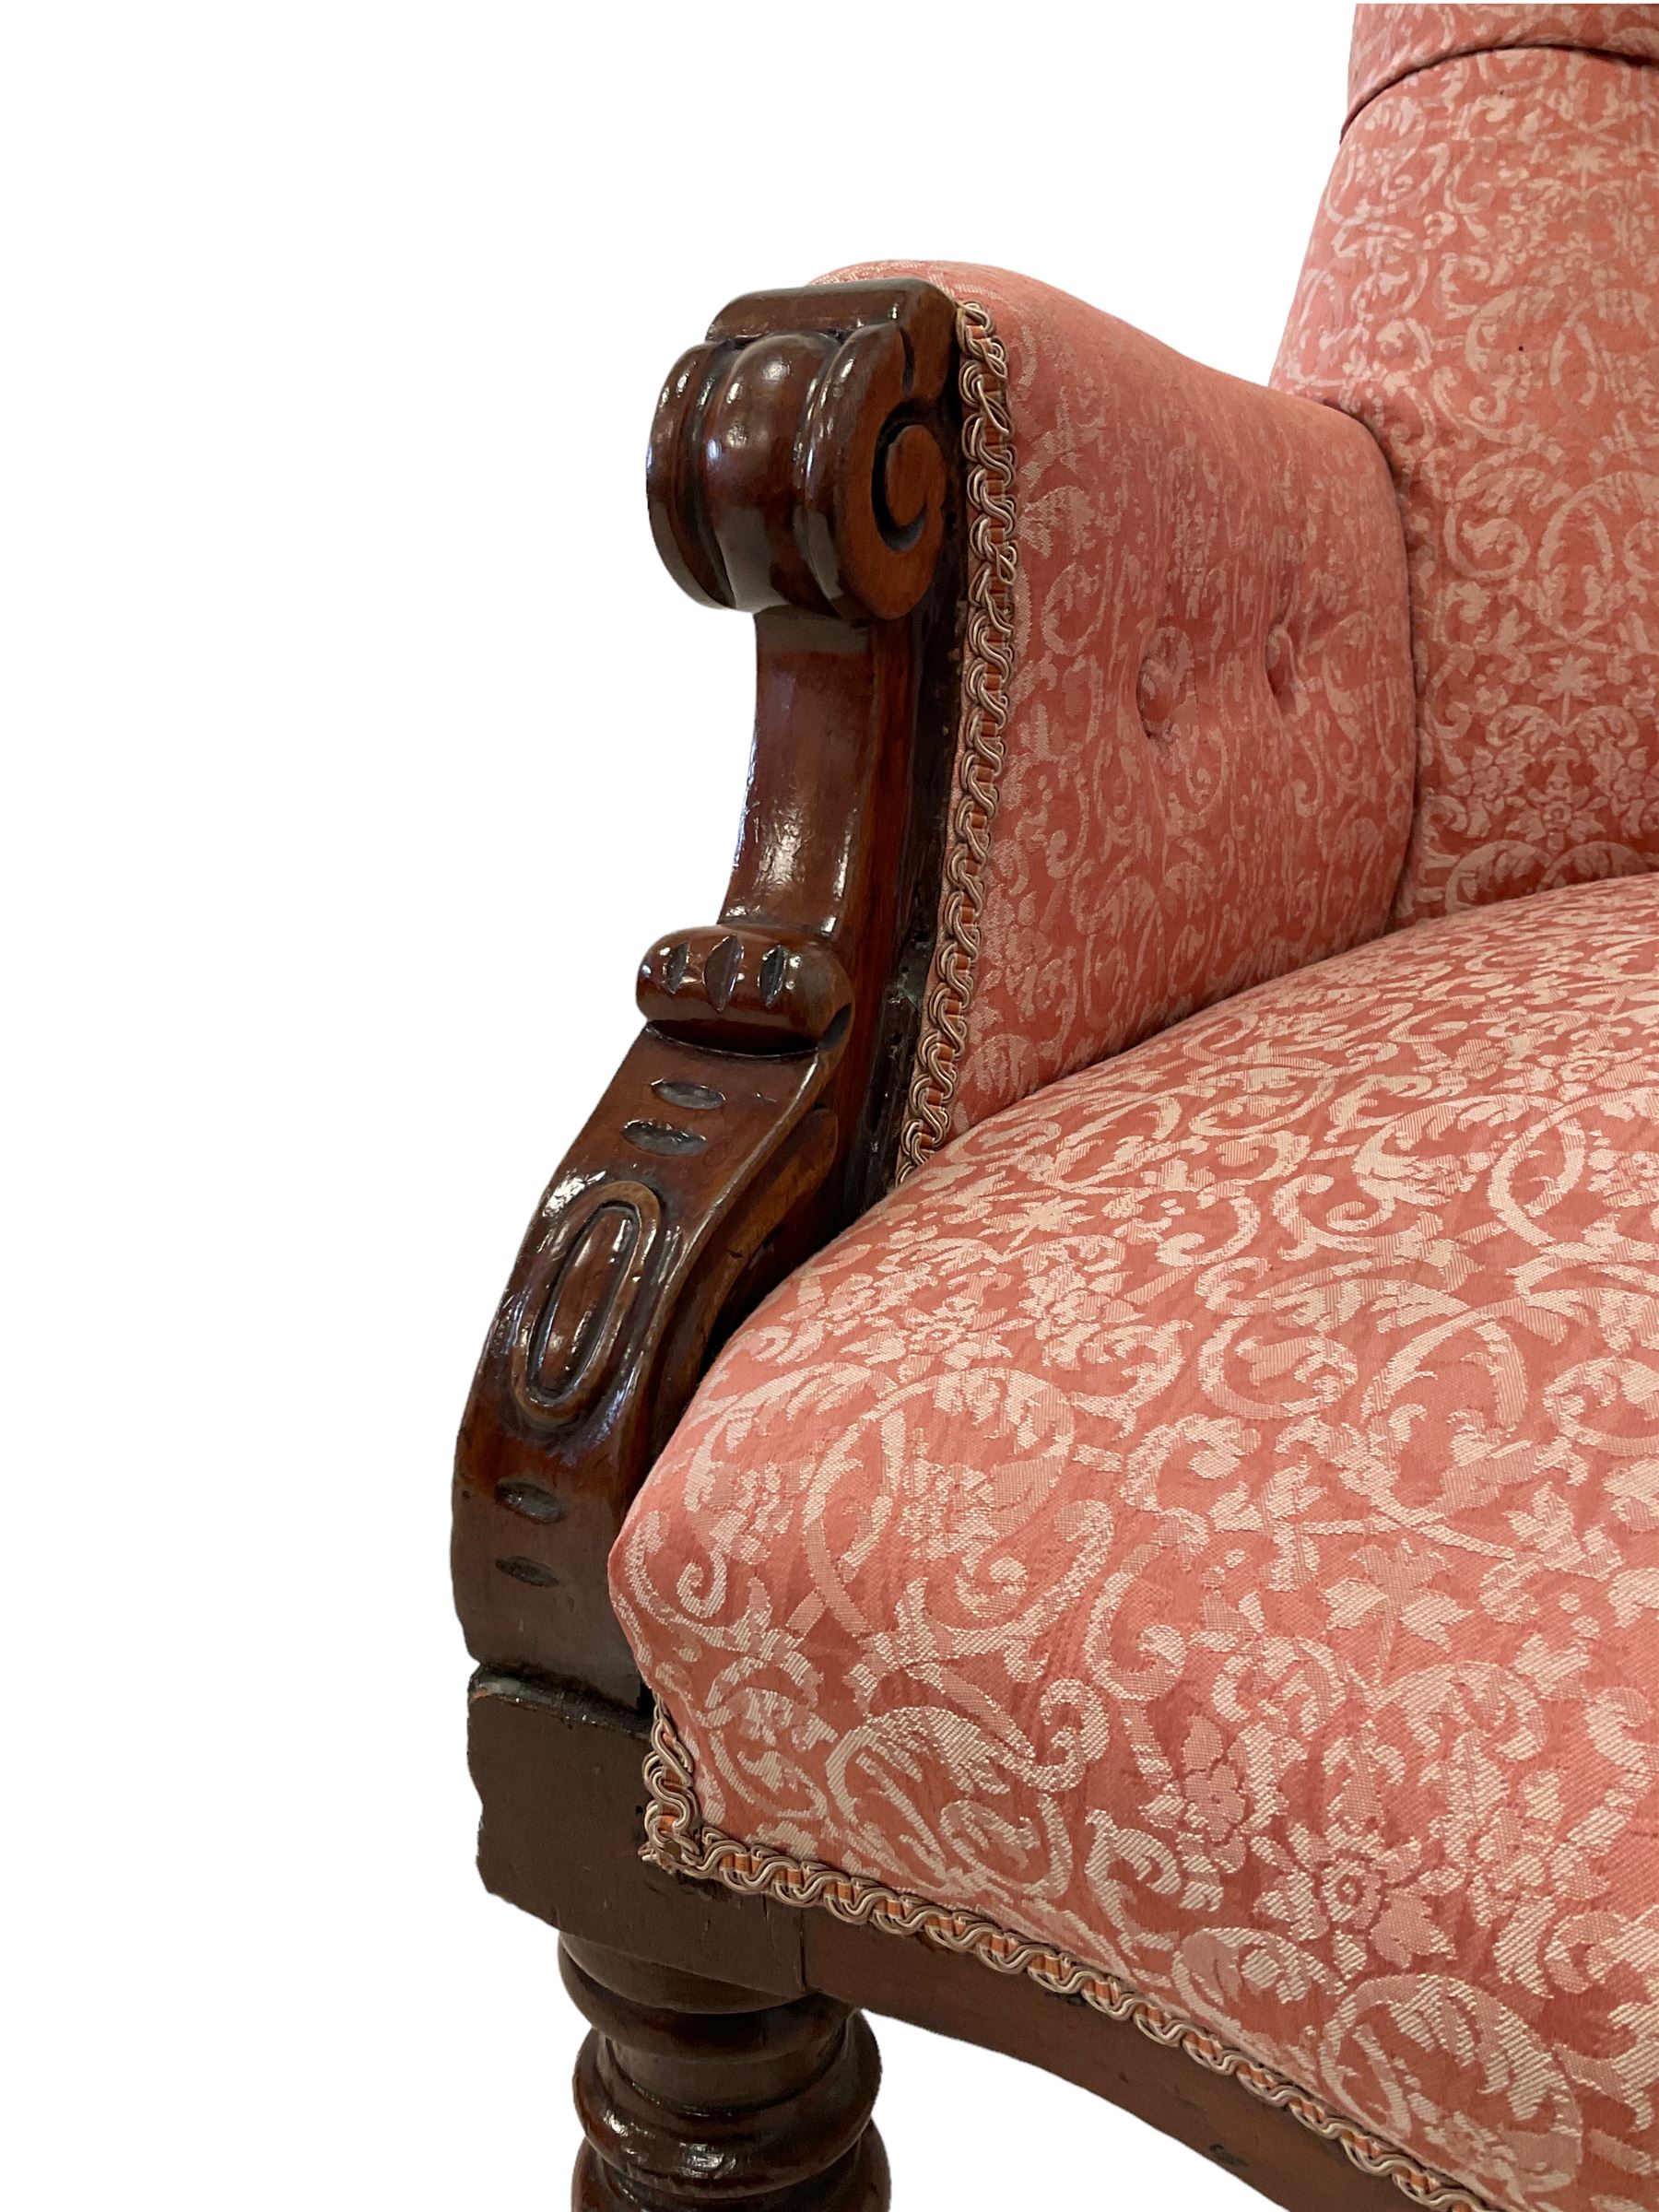 19th century mahogany armchair - Image 4 of 6